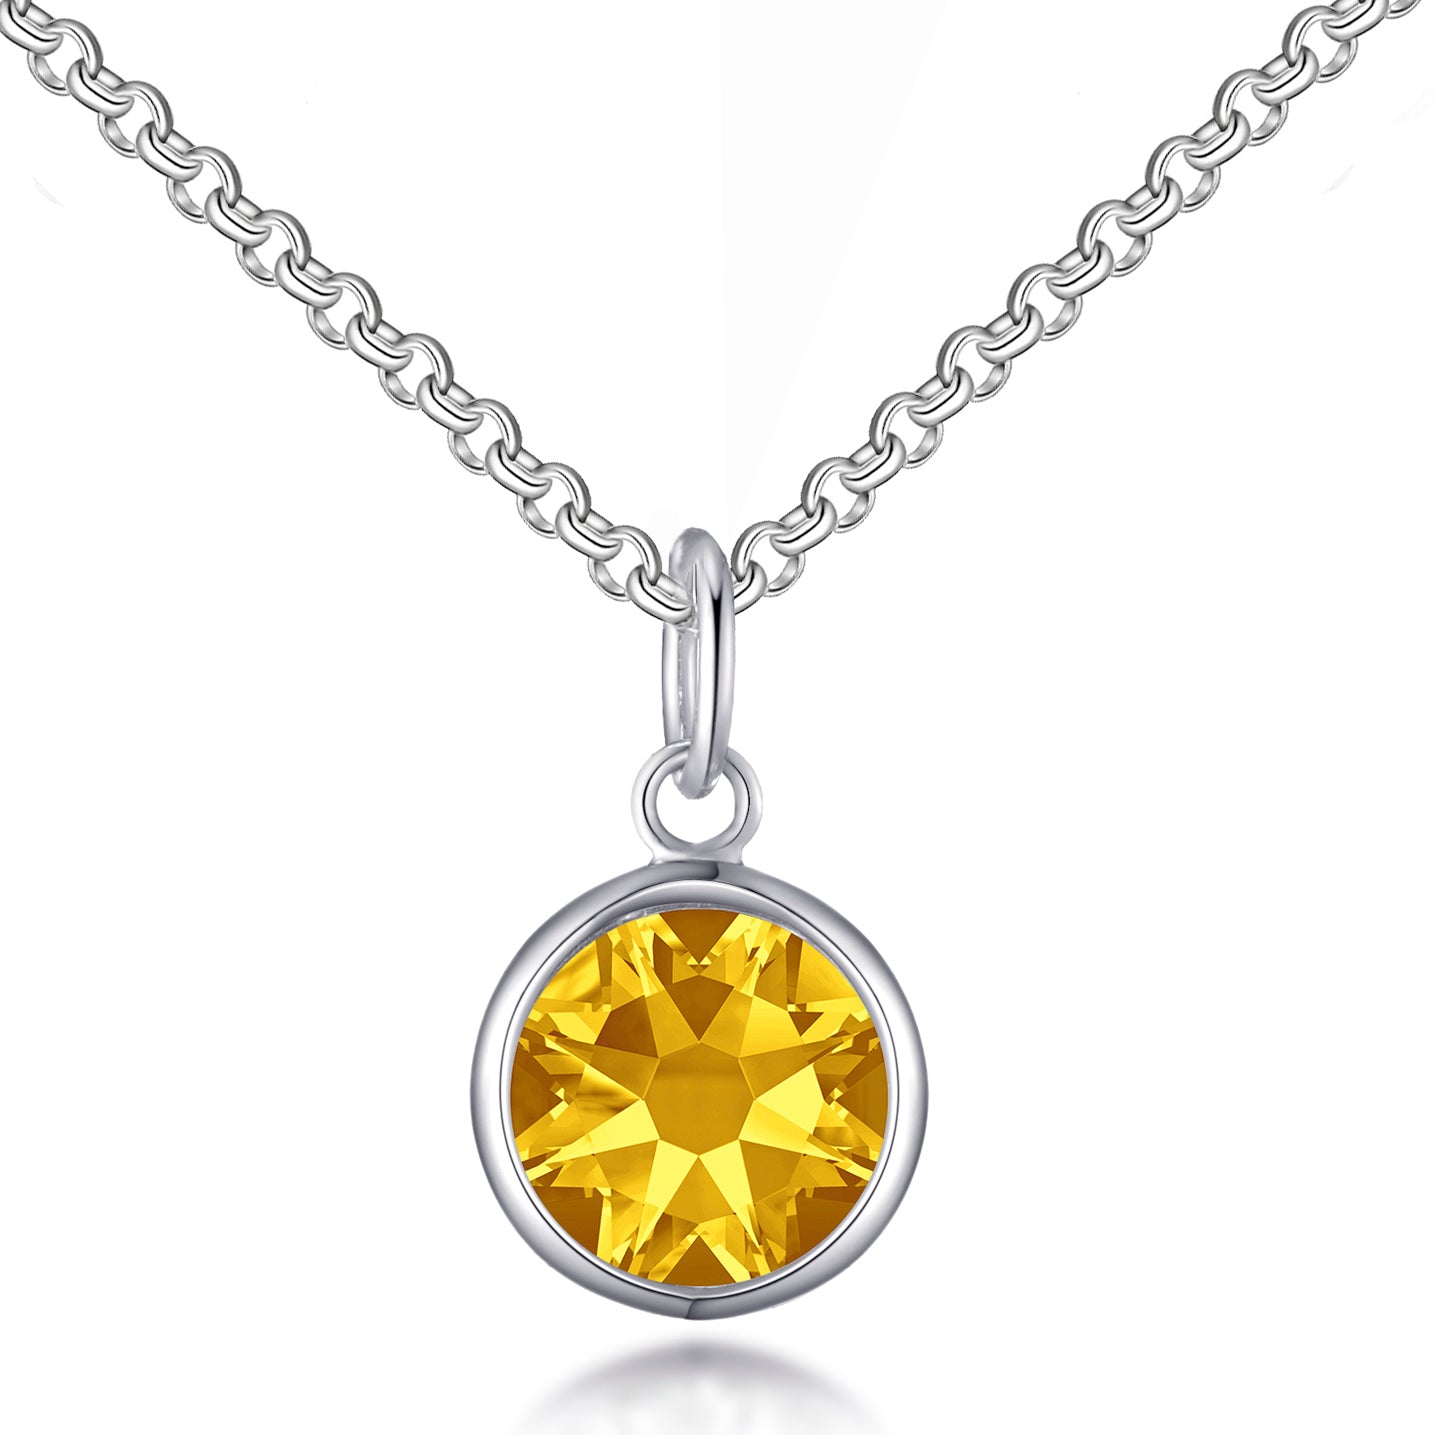 New 100% Authentic SWAROVSKI Yellow Gold Triangle Cut Crystal Necklace  5599487 | eBay